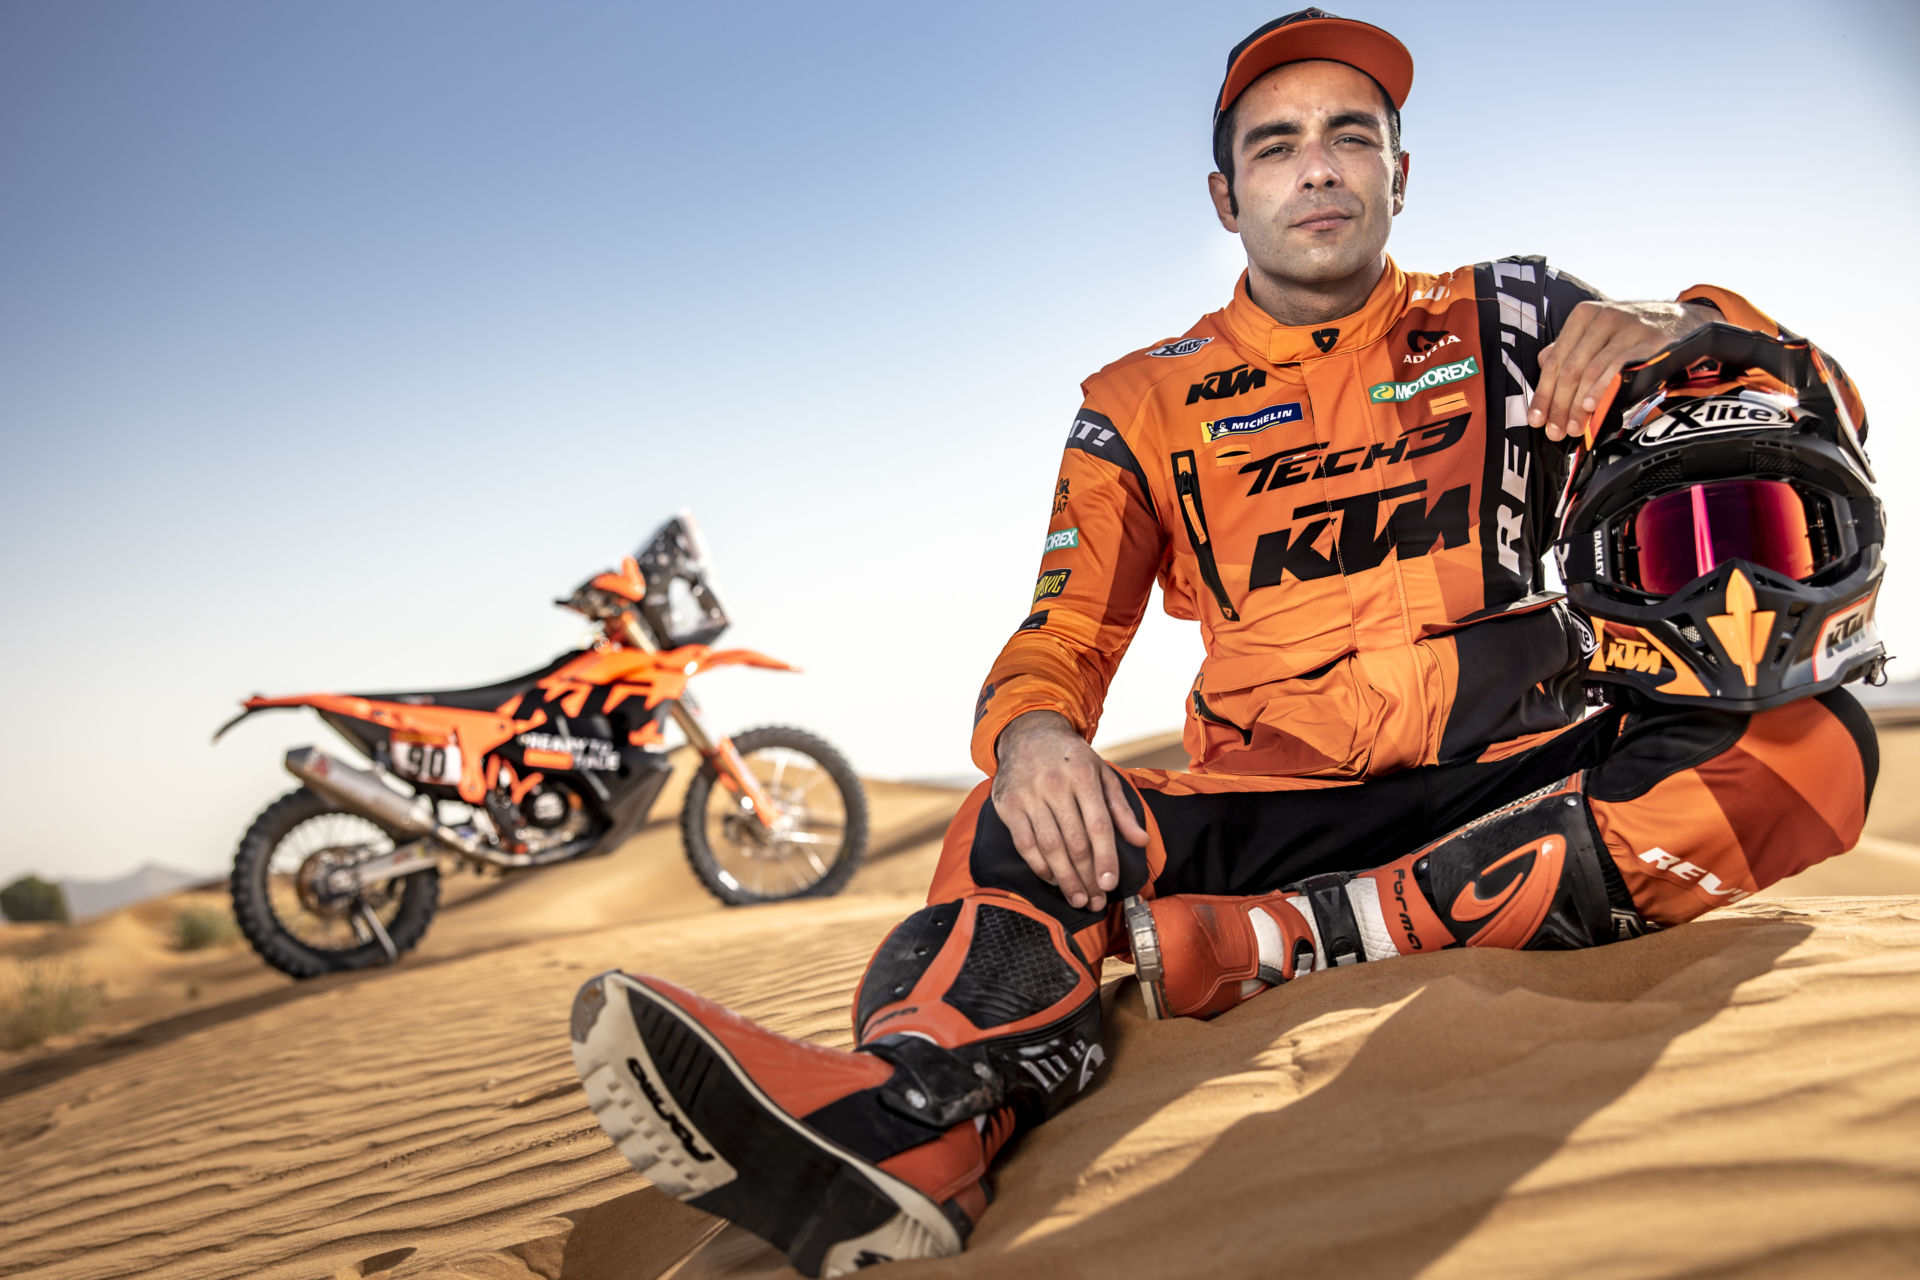 MotoGP star Danilo Petrucci will race in the Dakar Rally in January. Photo courtesy KTM Factory Racing.